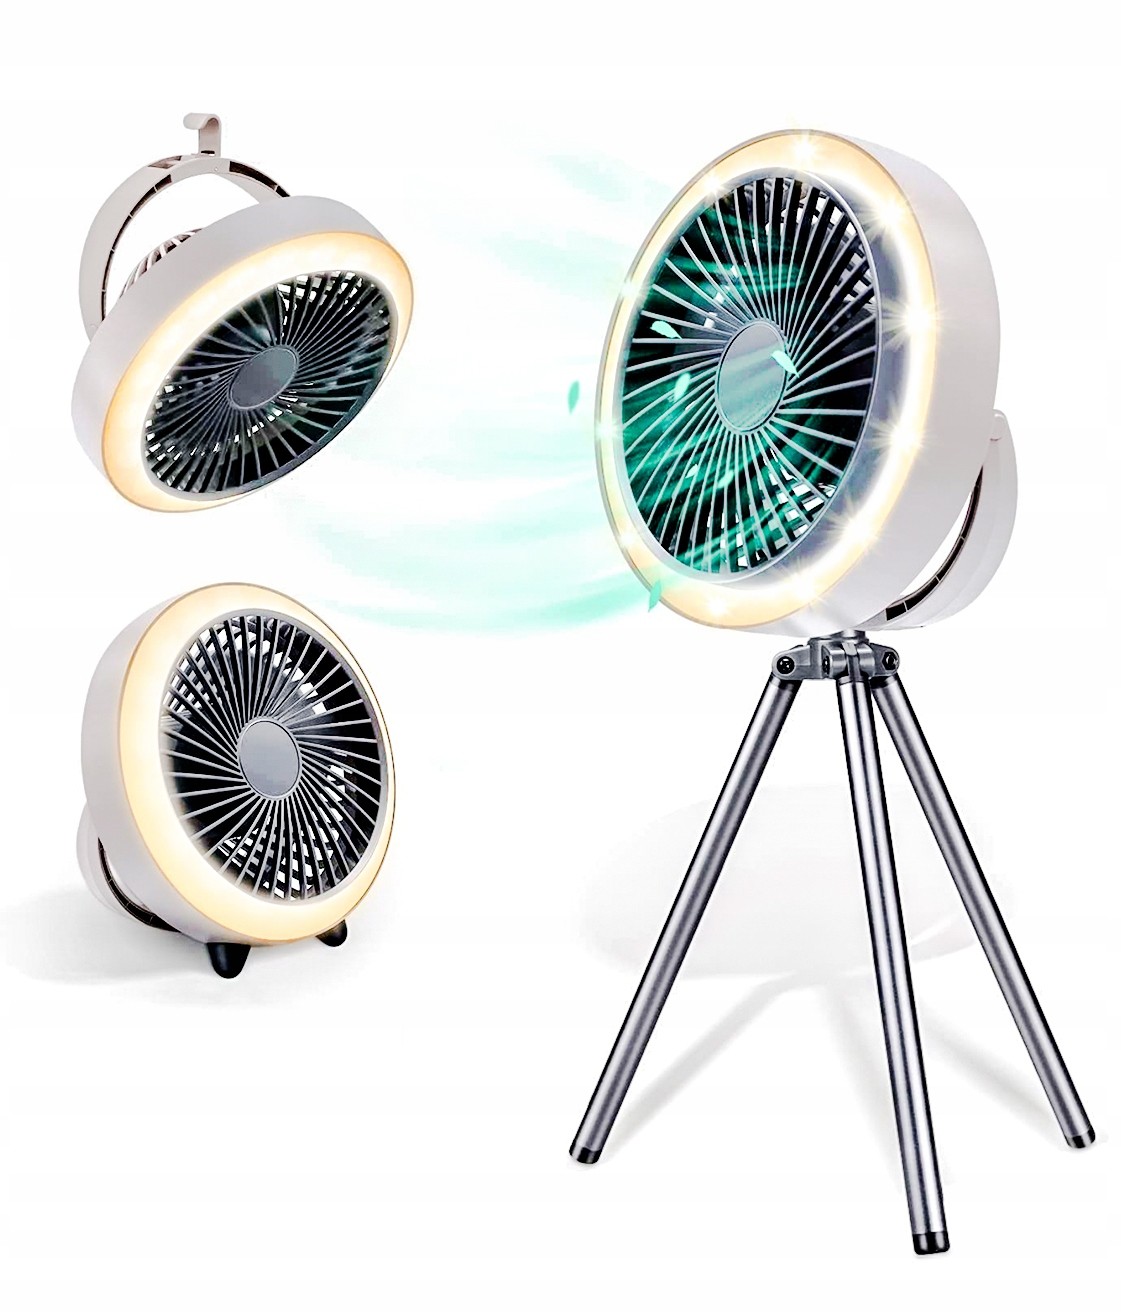 Stojanový ventilátor závěsný Led světlo 3v1 PowerBank